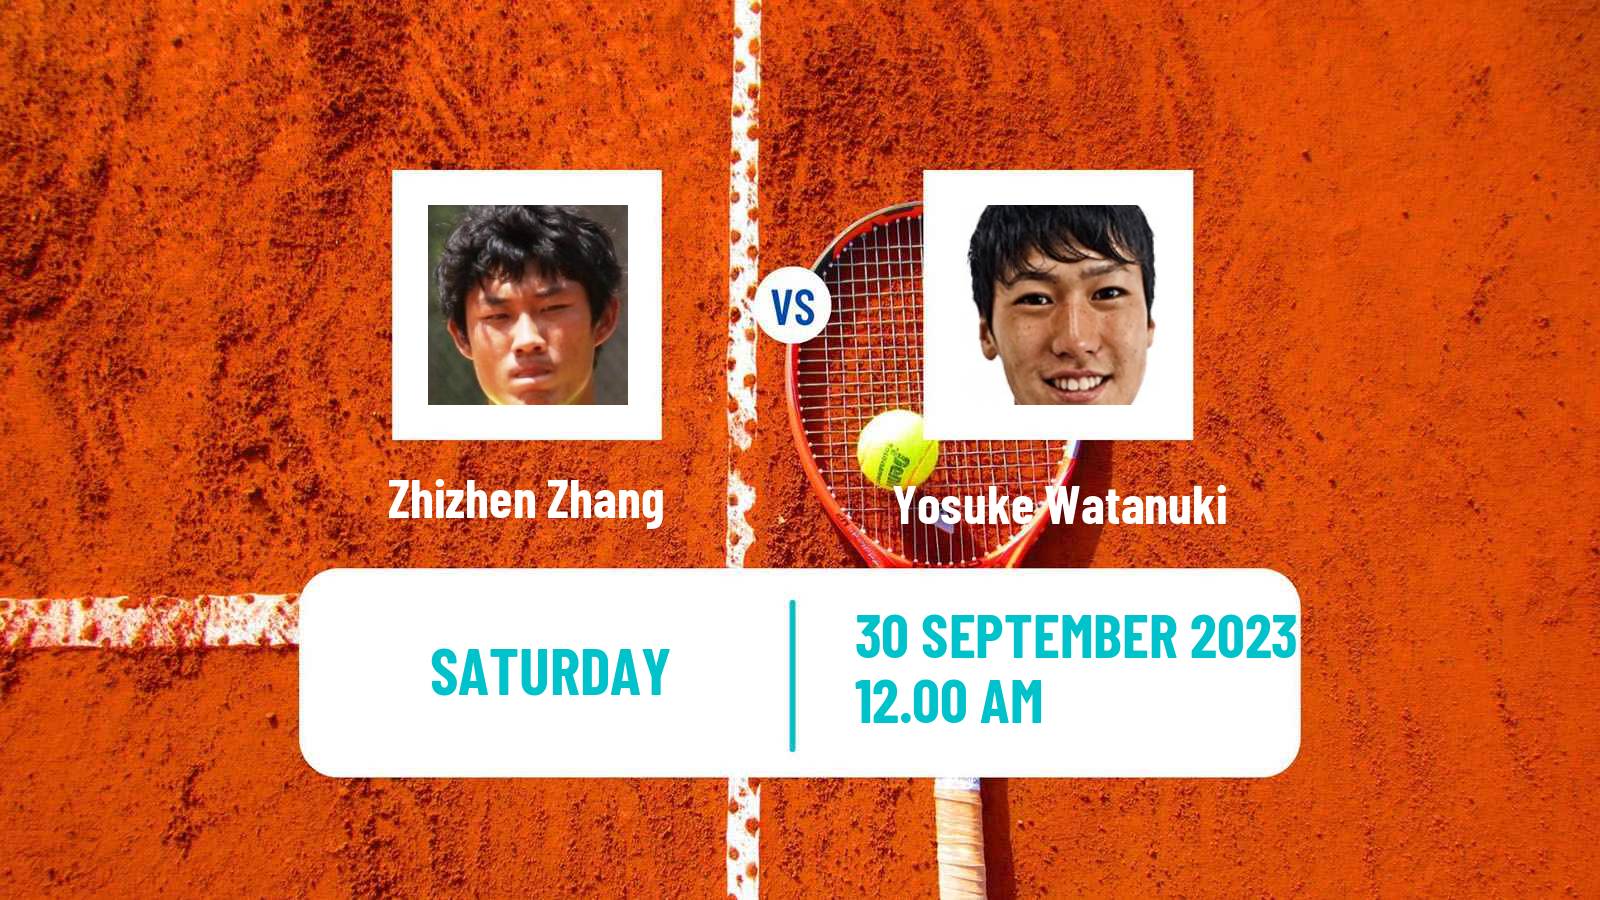 Tennis ATP Asian Games Zhizhen Zhang - Yosuke Watanuki